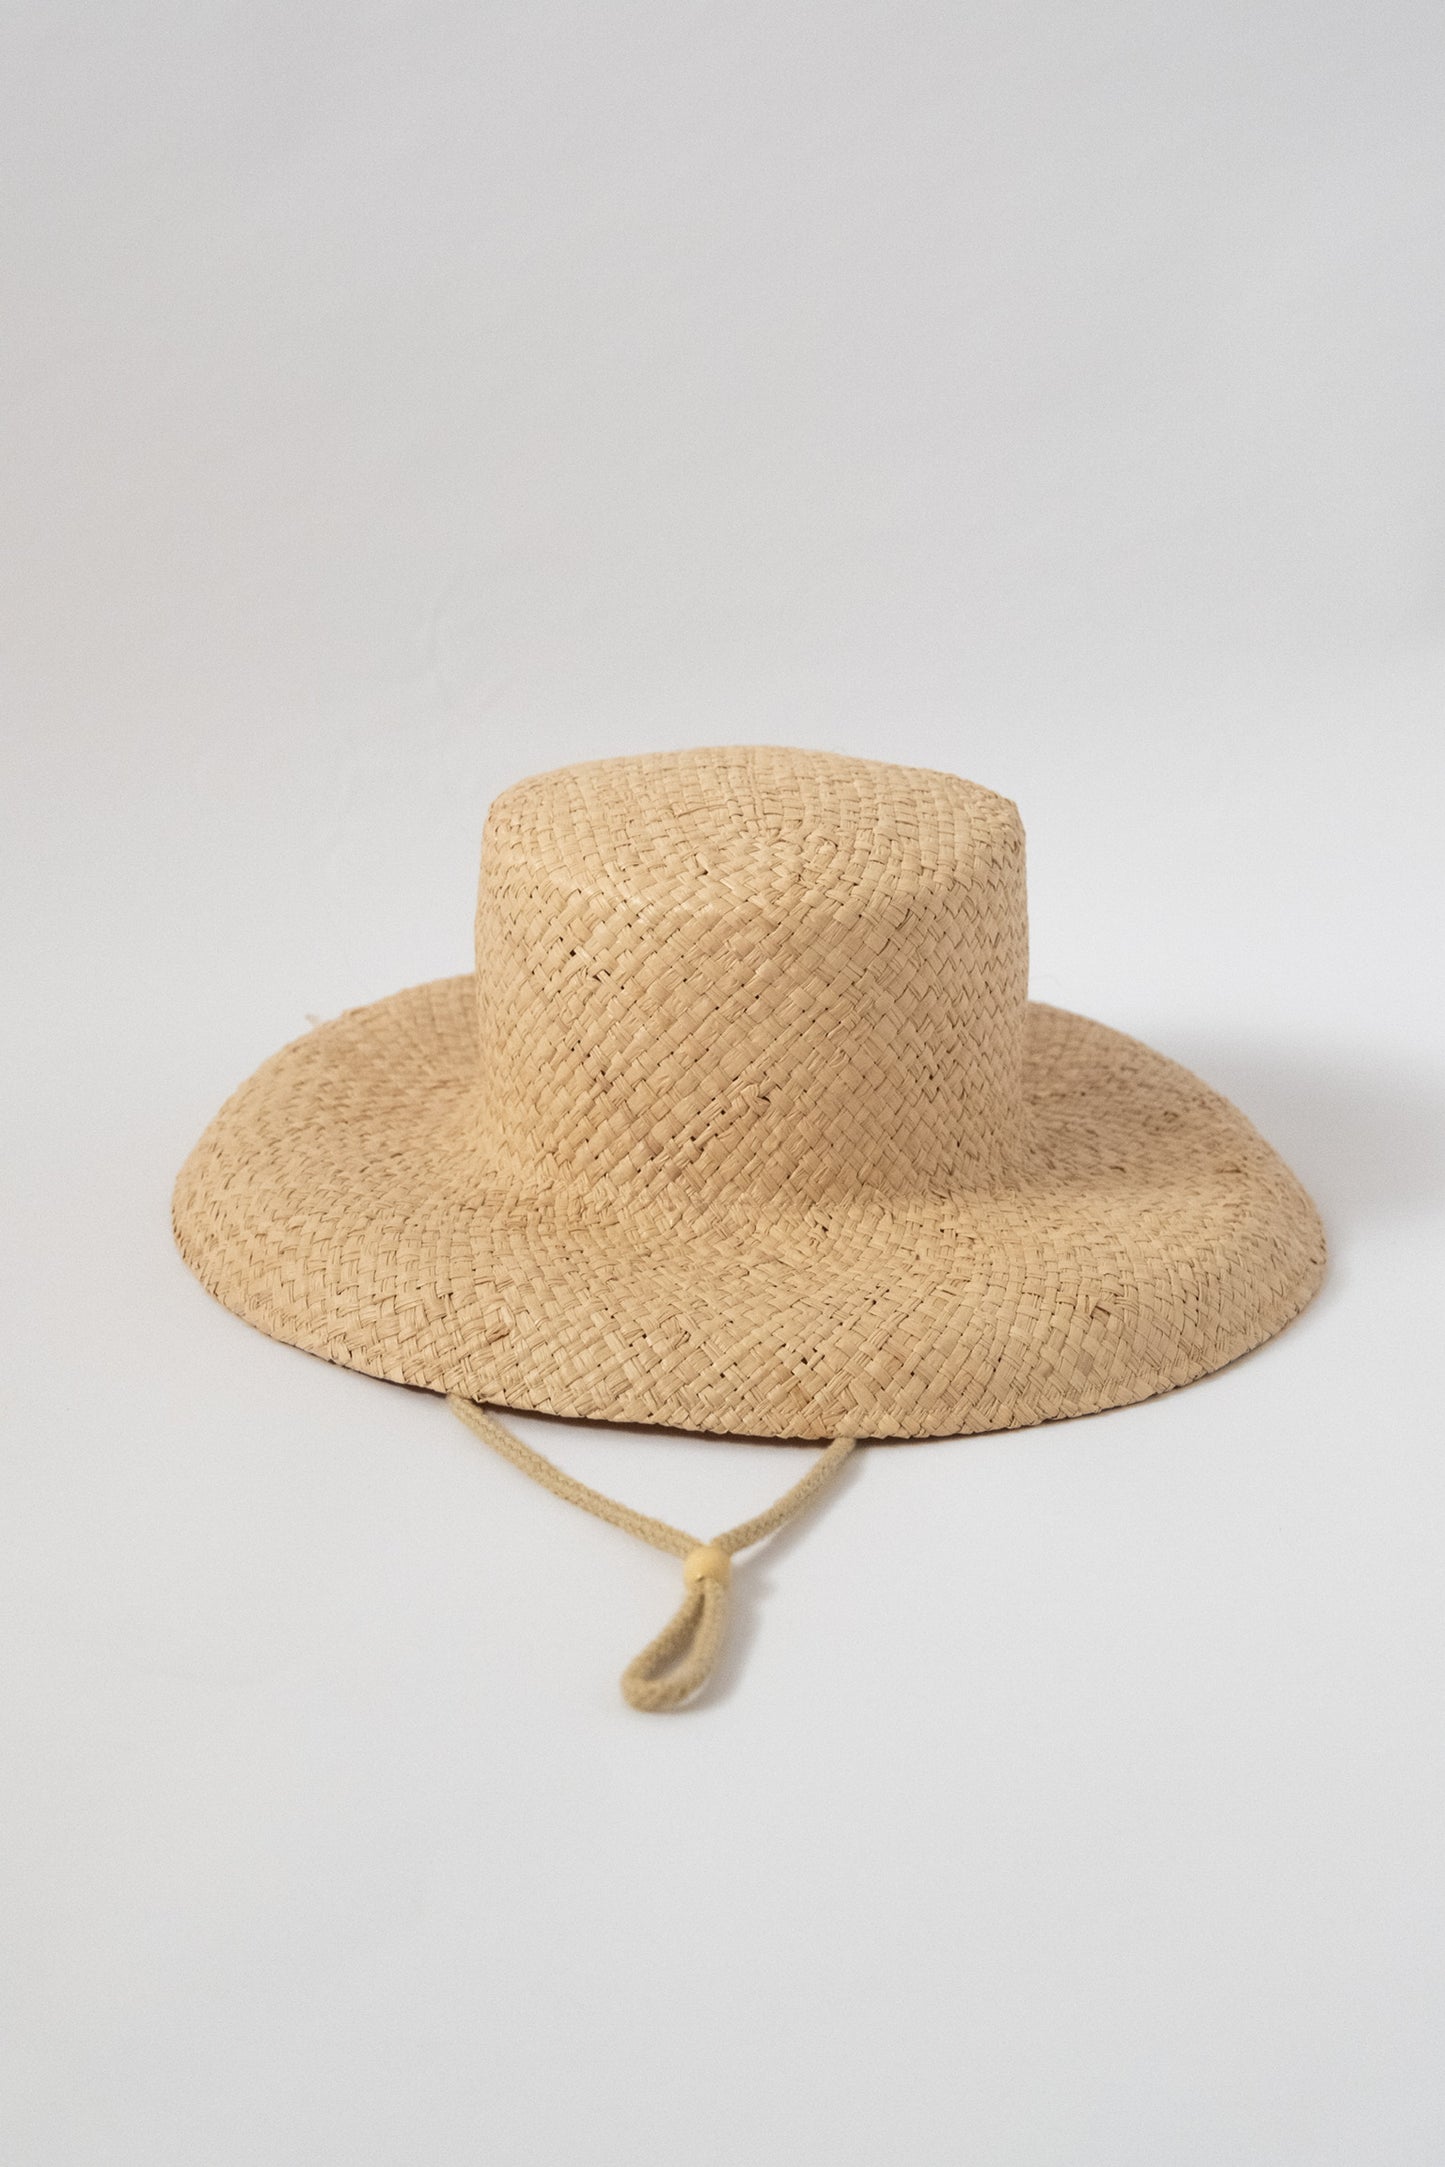 Coastal Cowgirl Sun Hat